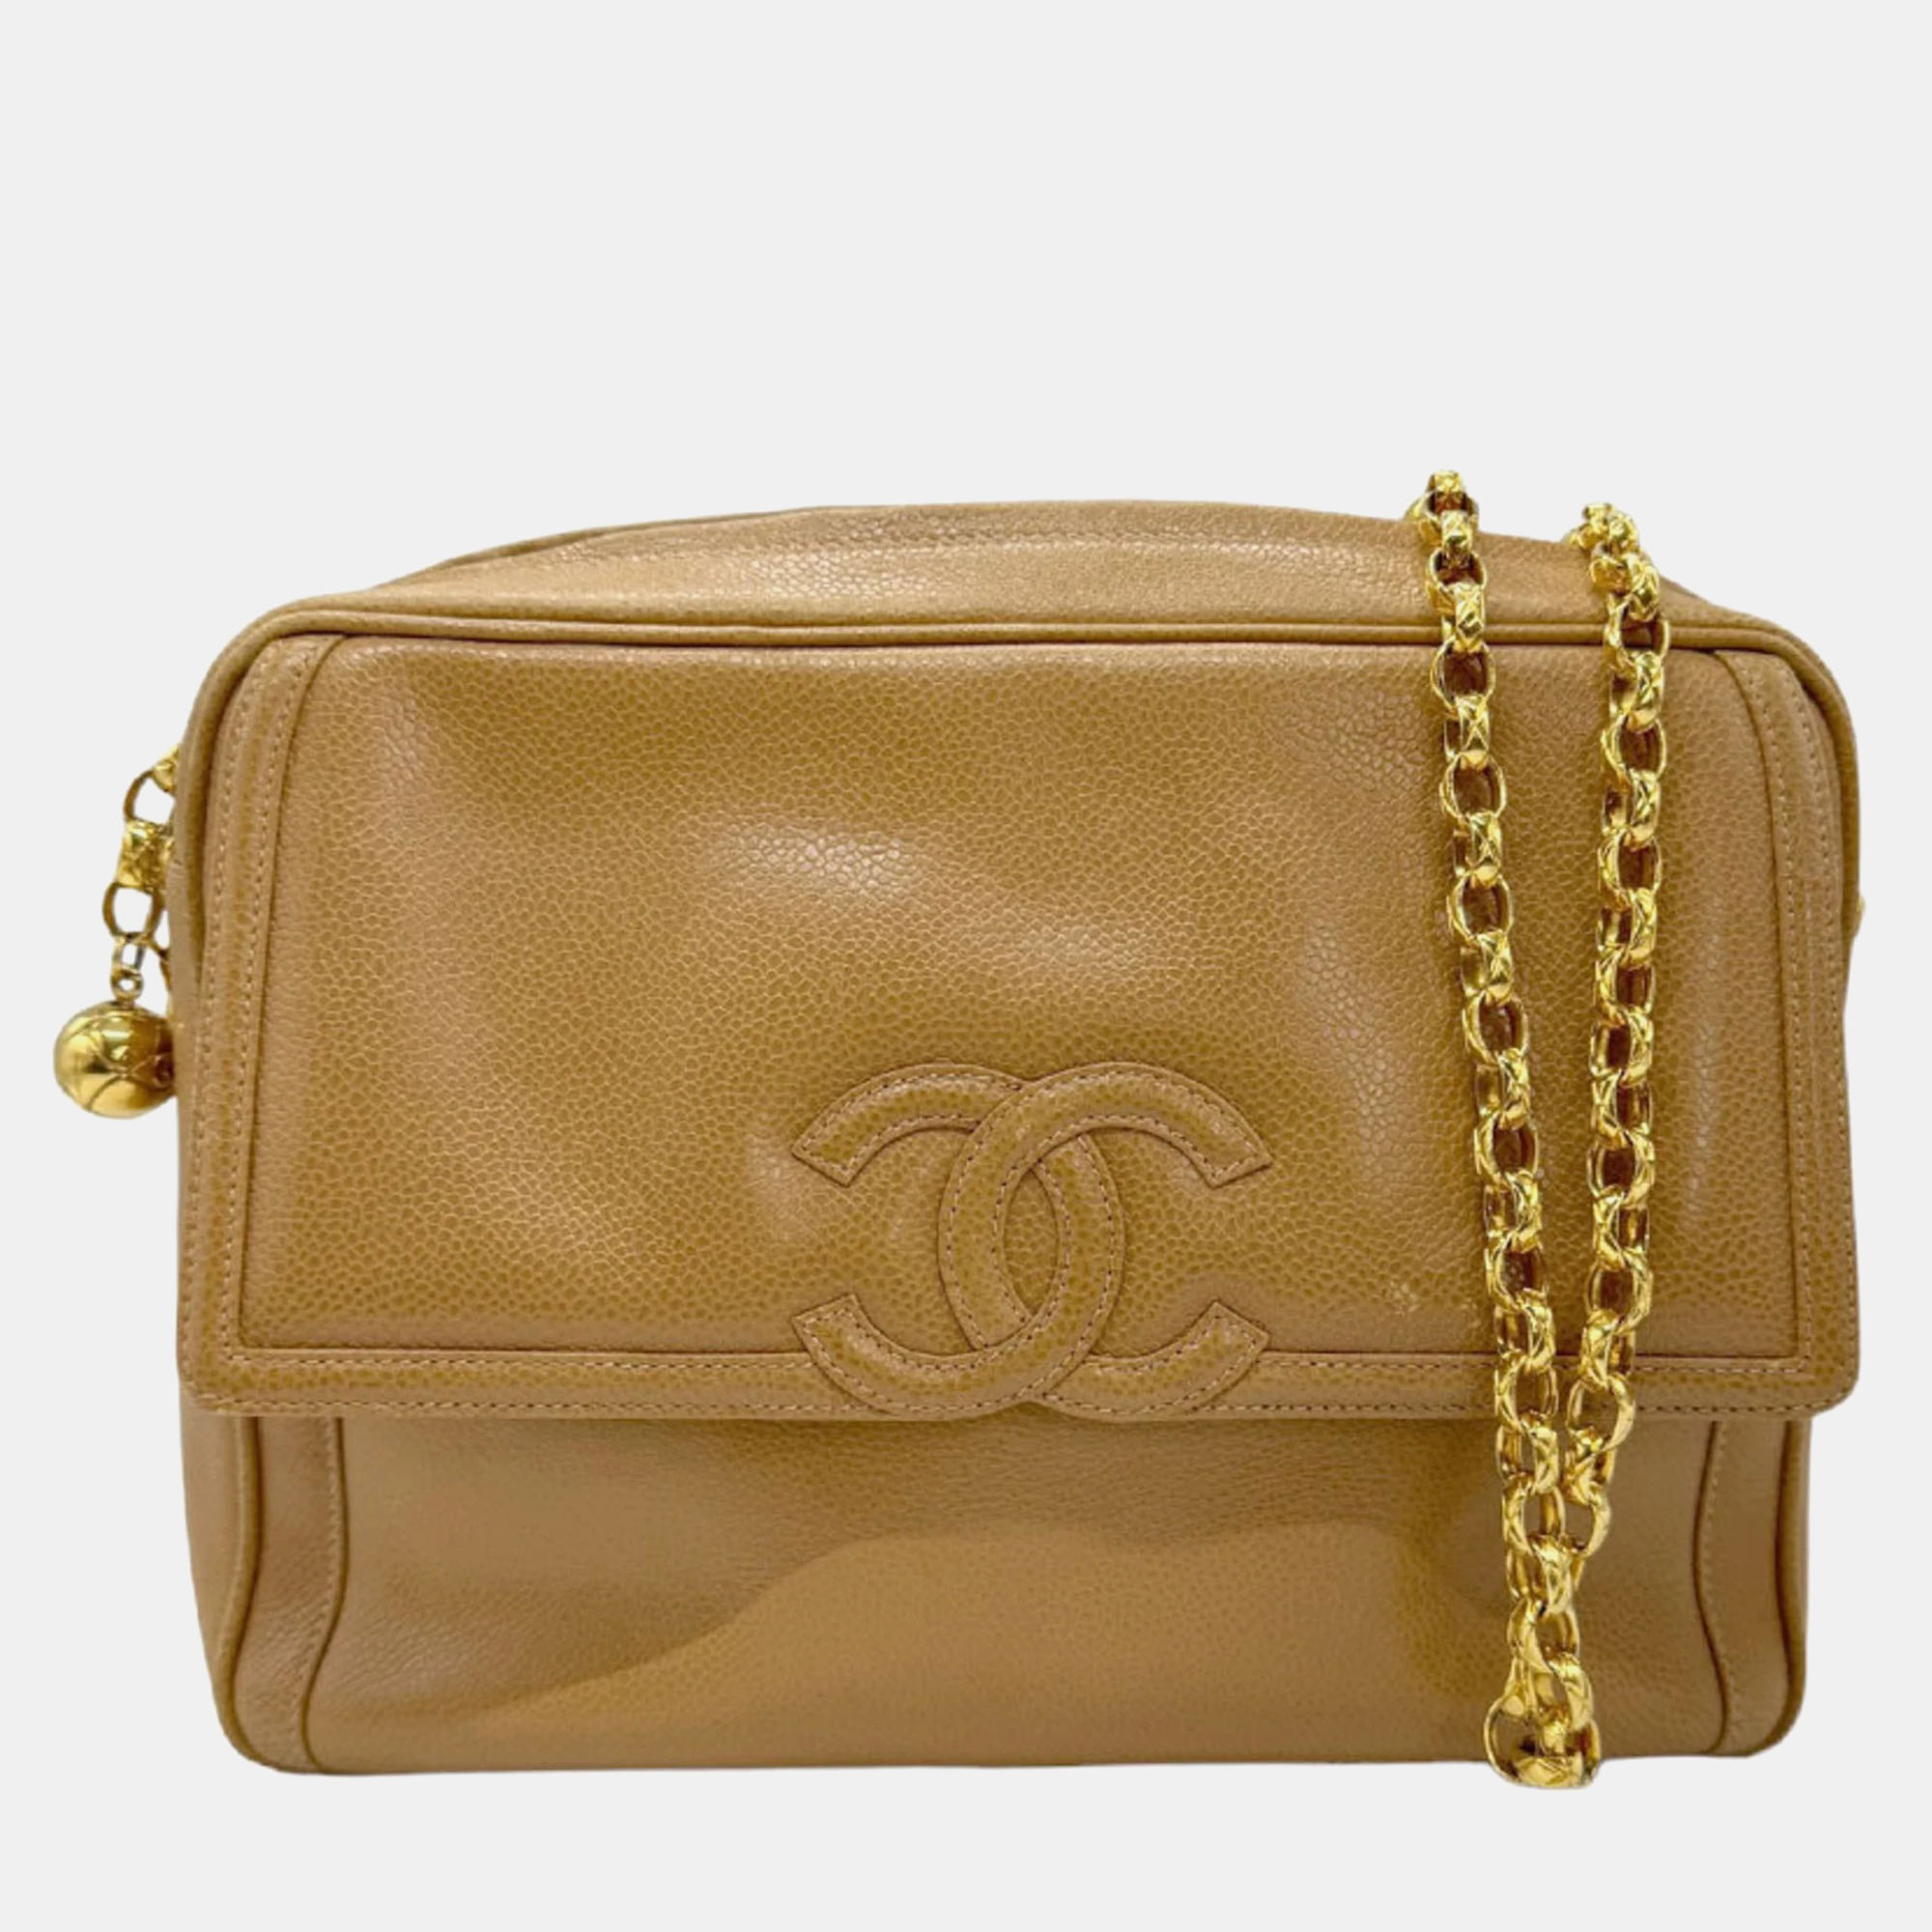 Chanel white leather large caviar cc logo flap shoulder bag